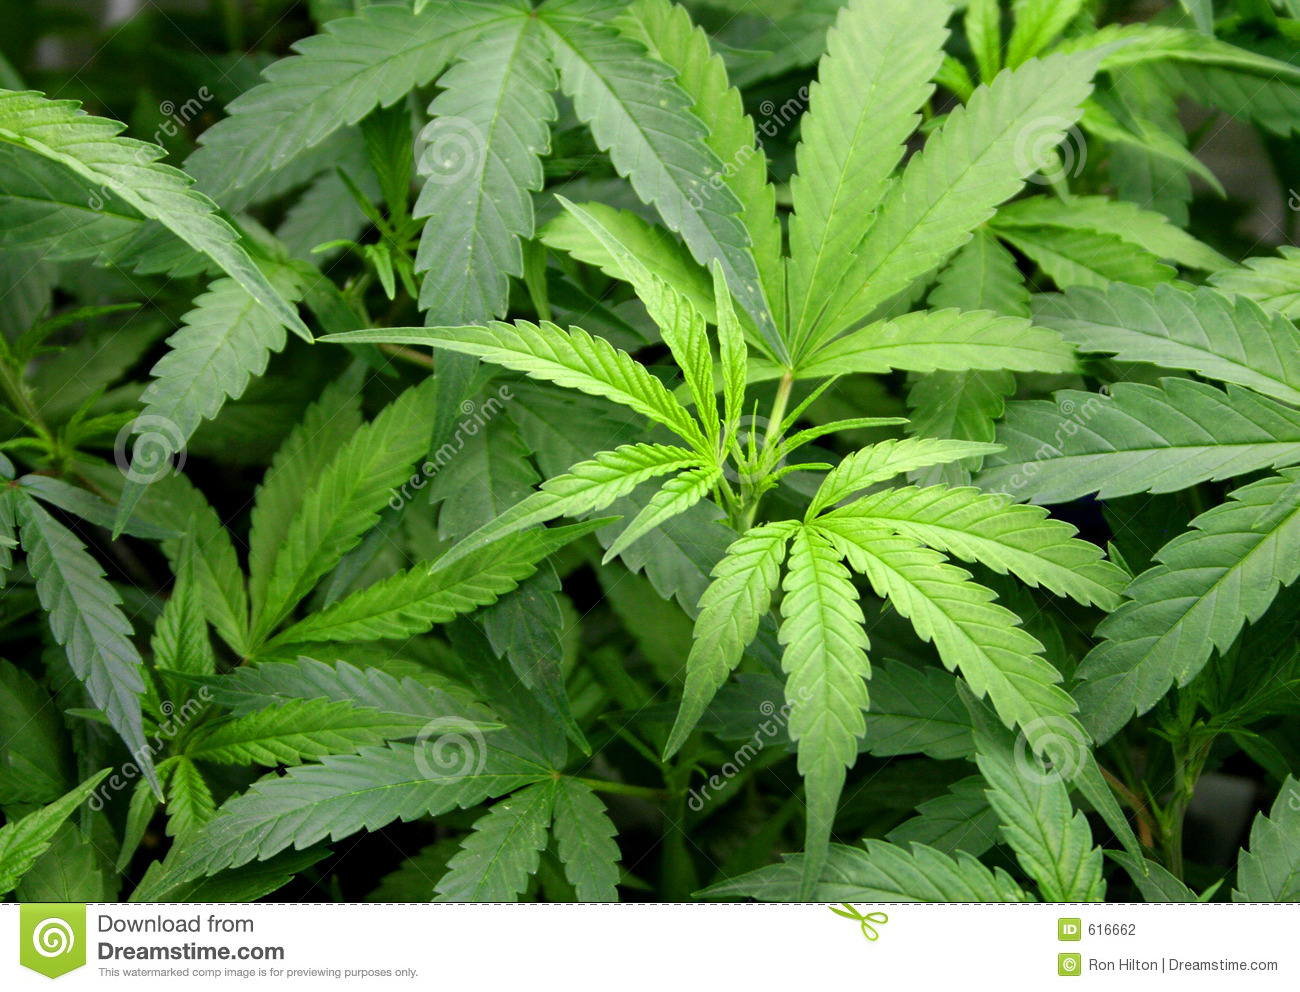 Marijuana Stock Photography   Image  616662